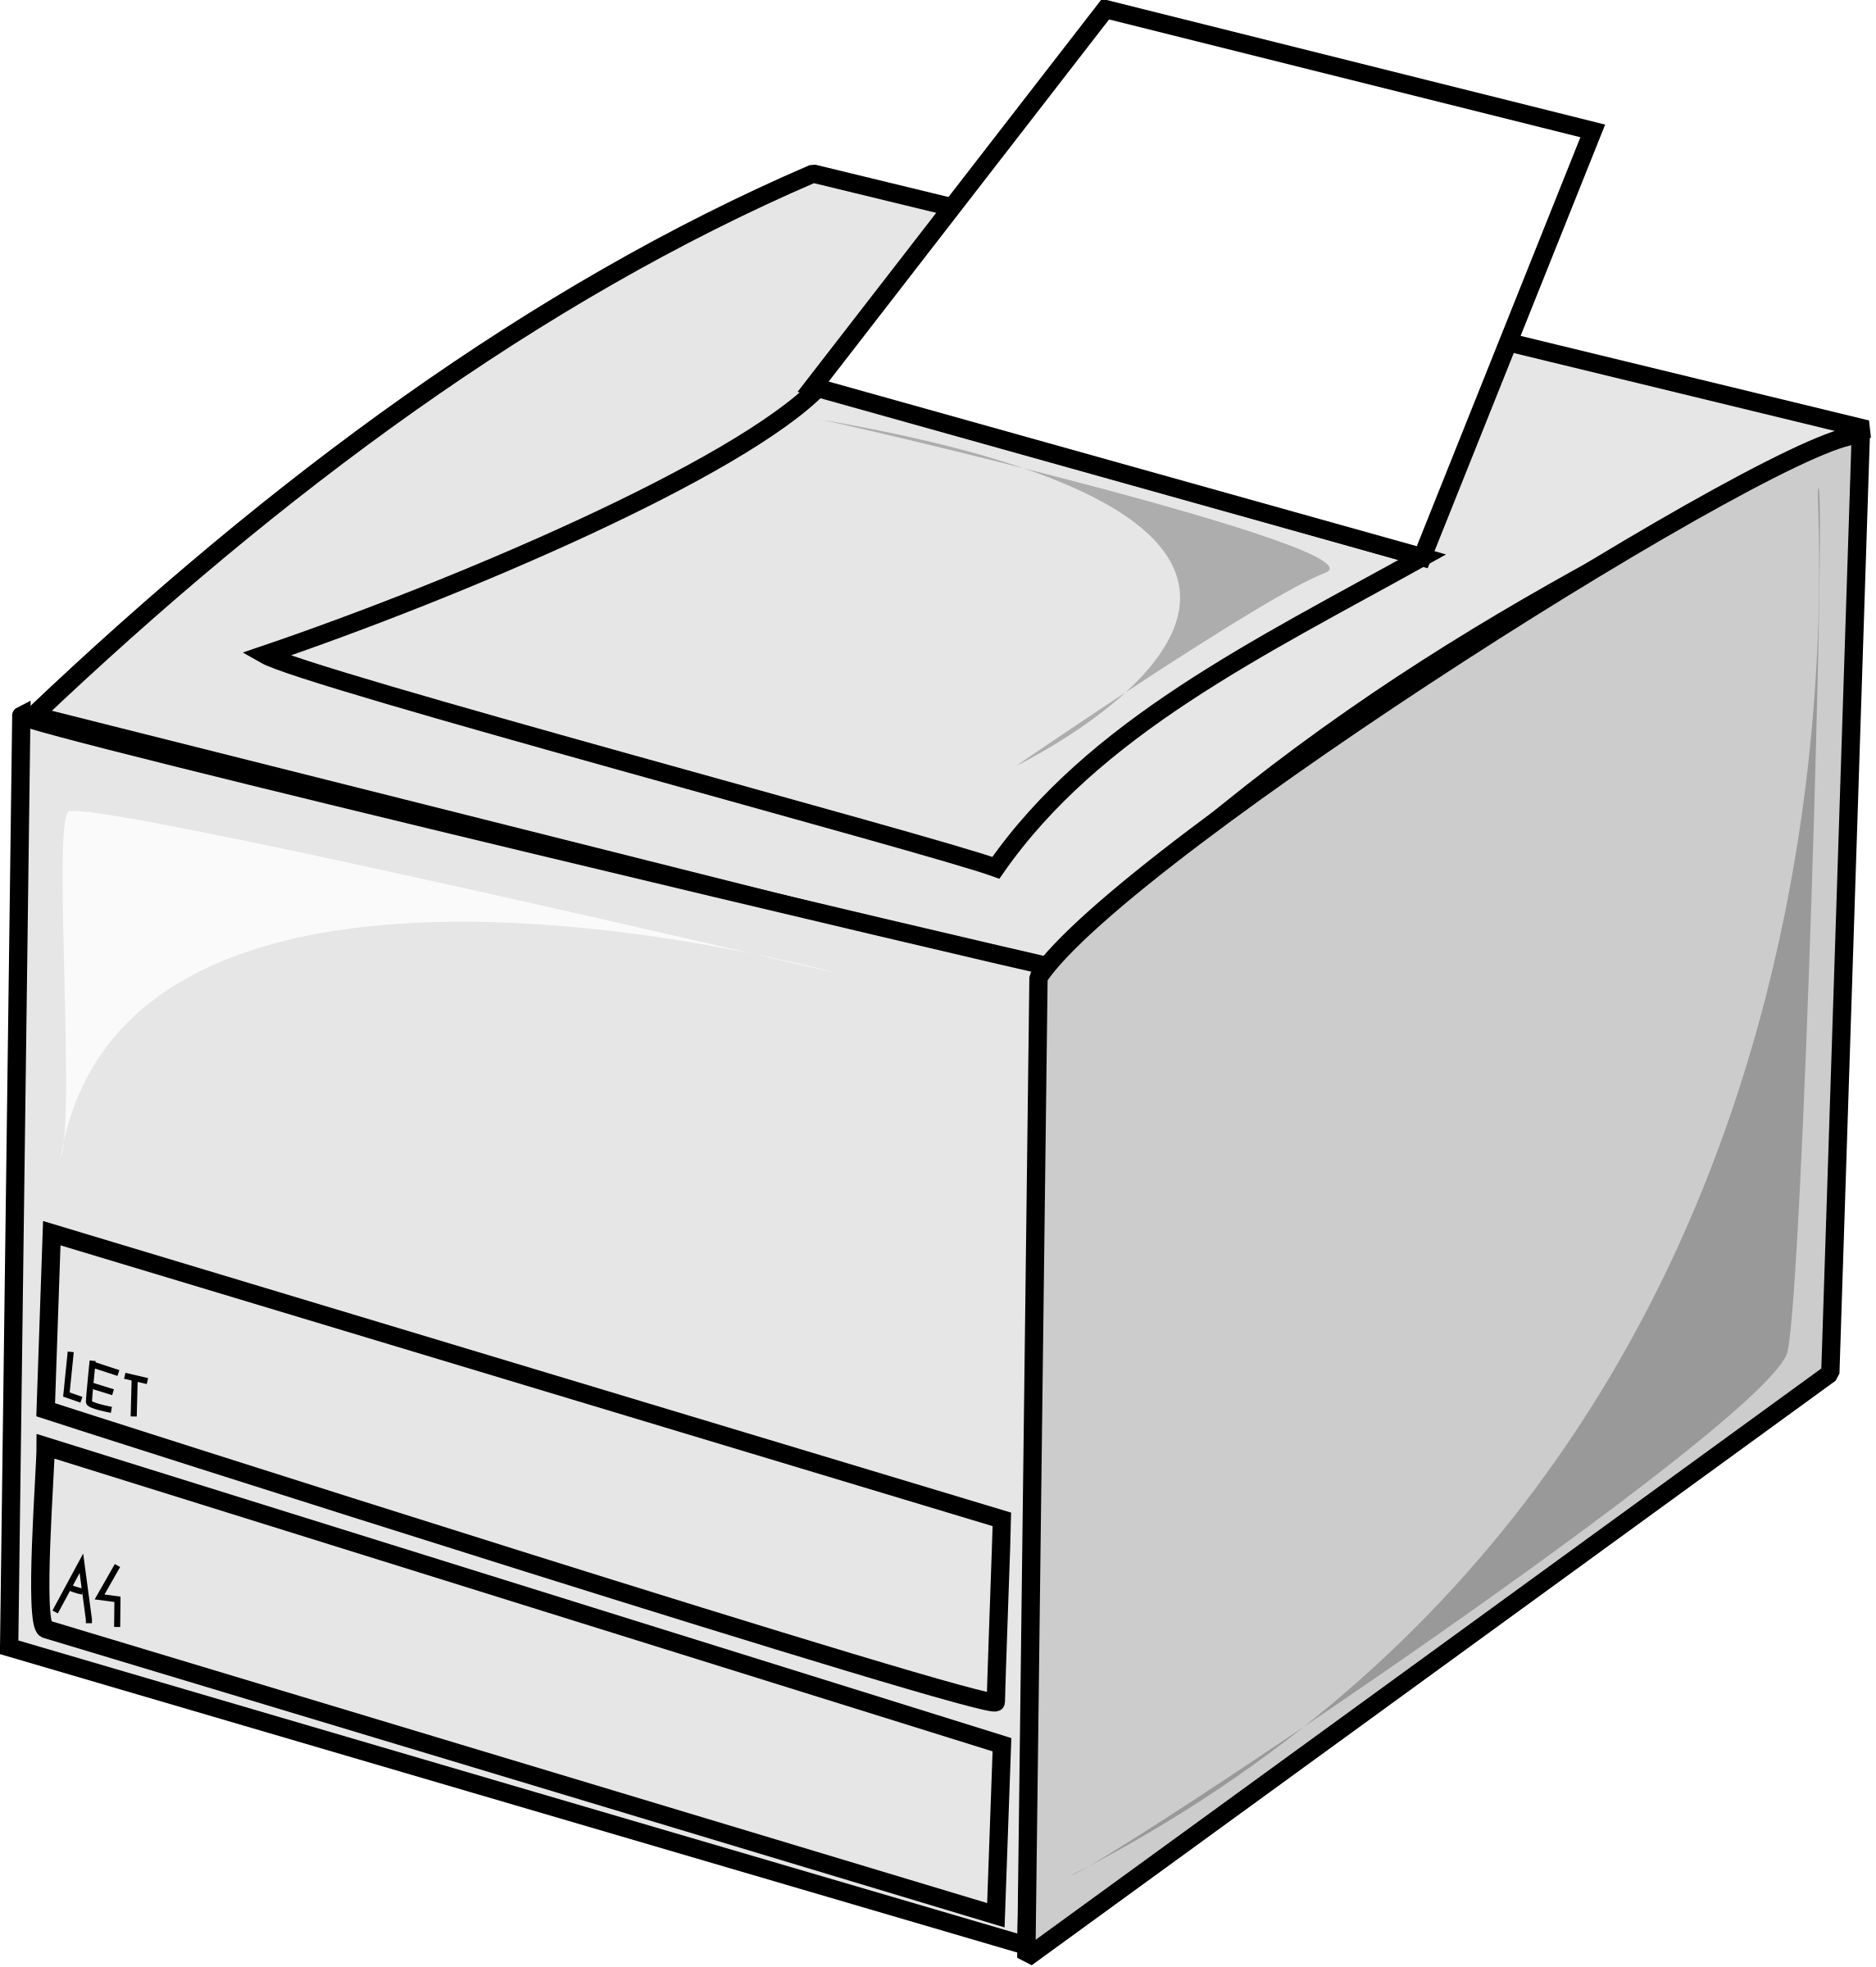 Printer - Laser Printer Clipart (2289x2400)